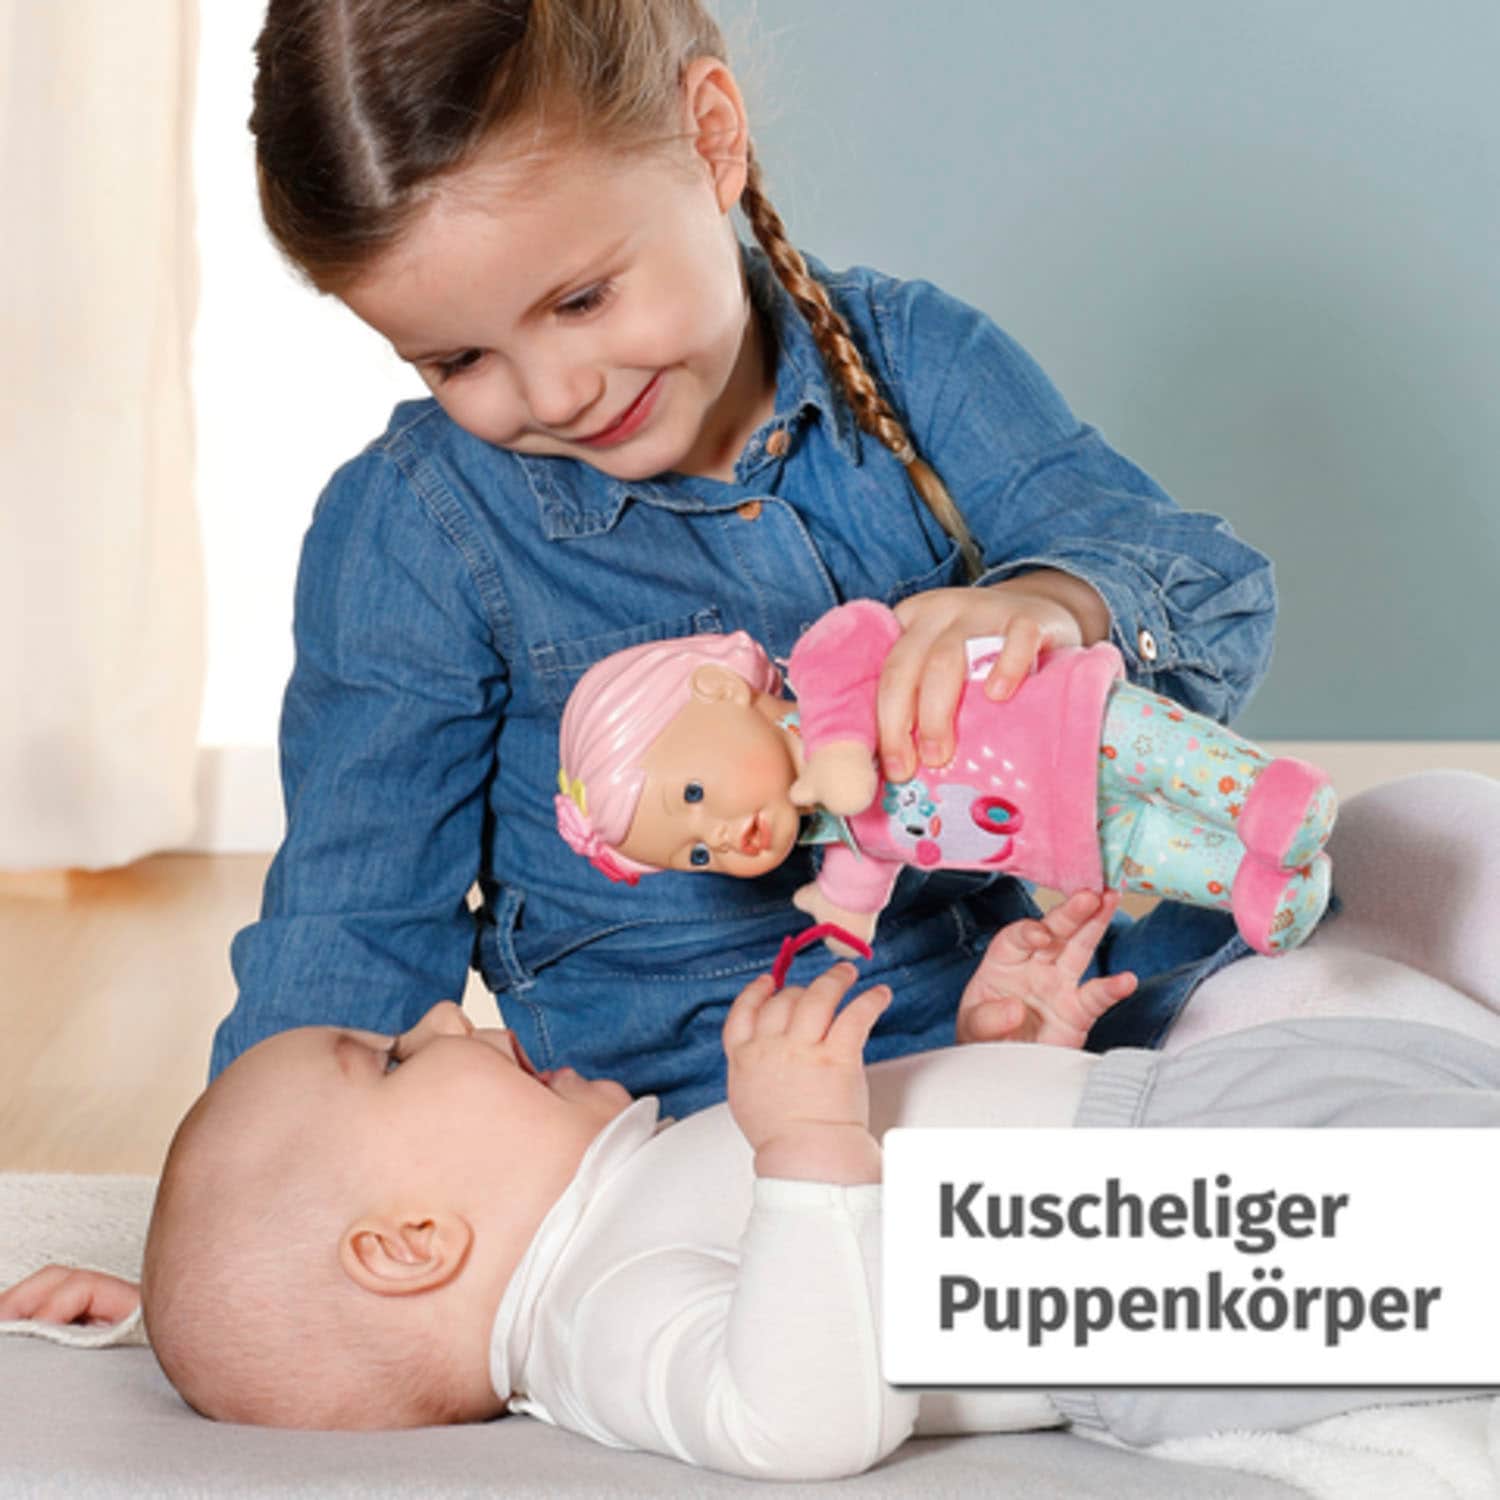 Baby Born Handpuppe »for babies, Fee 26 cm«